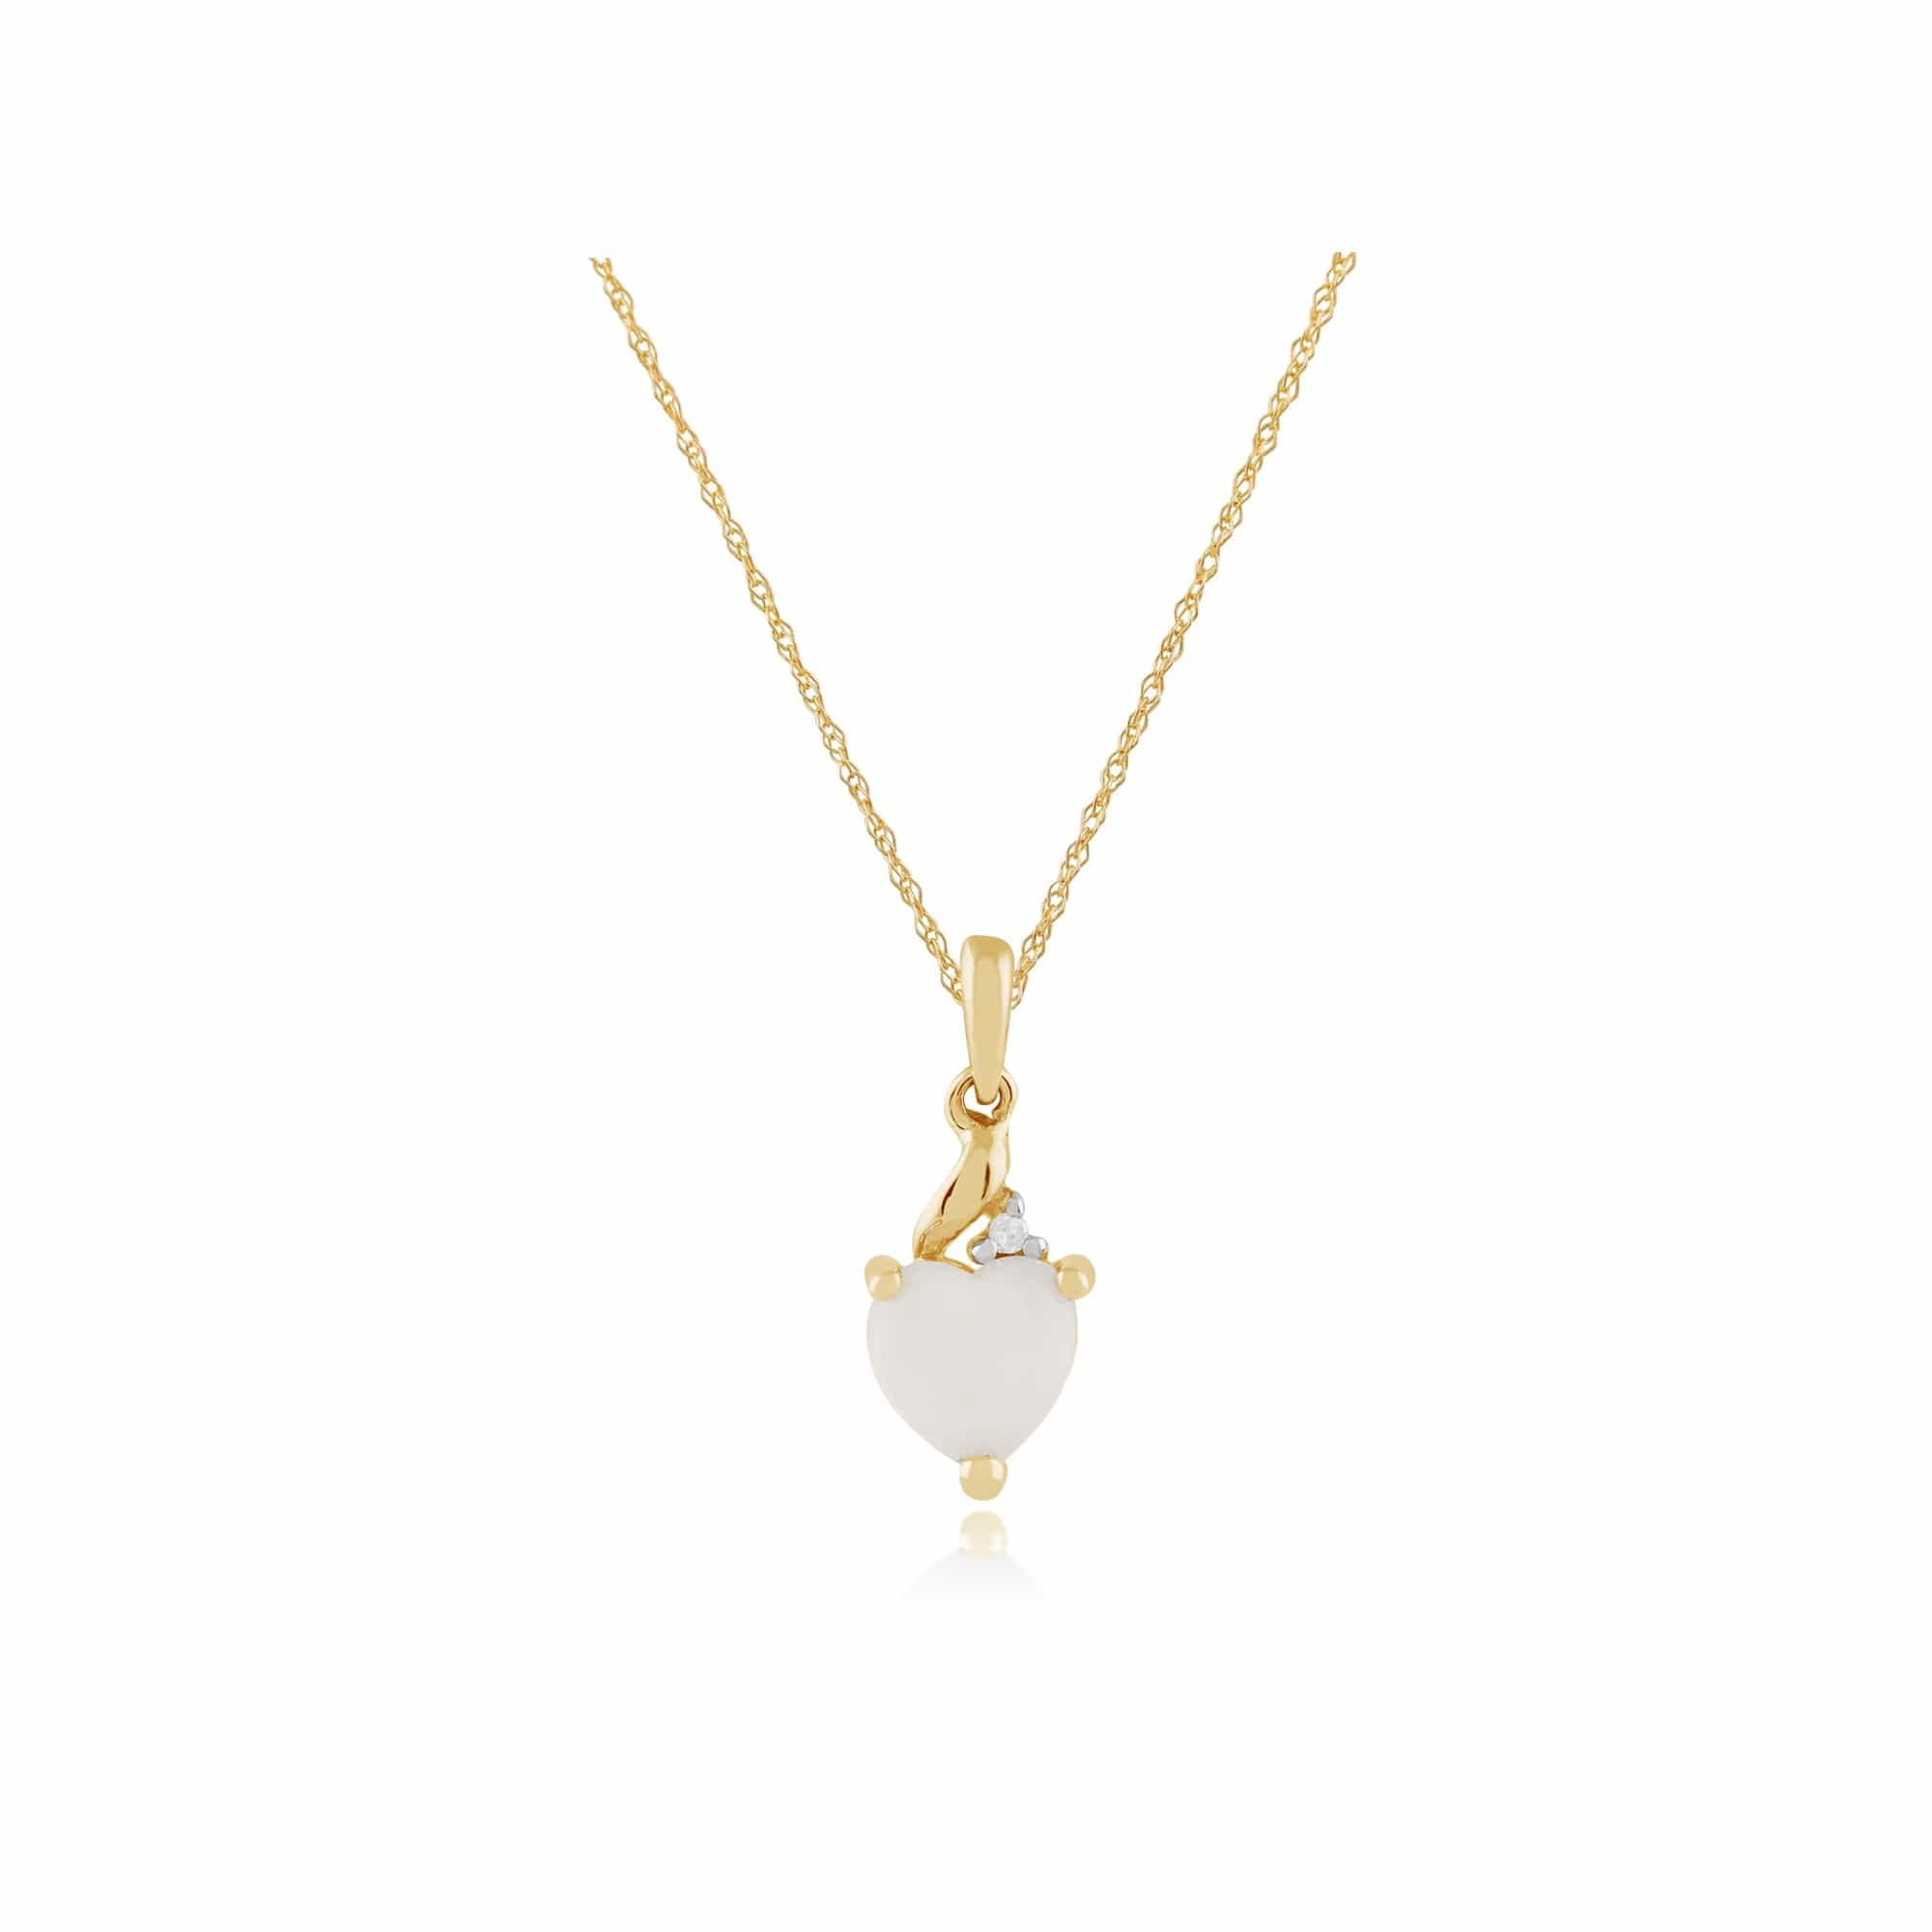 Classic Heart Opal & Diamond Pendant in 9ct Yellow Gold - Gemondo